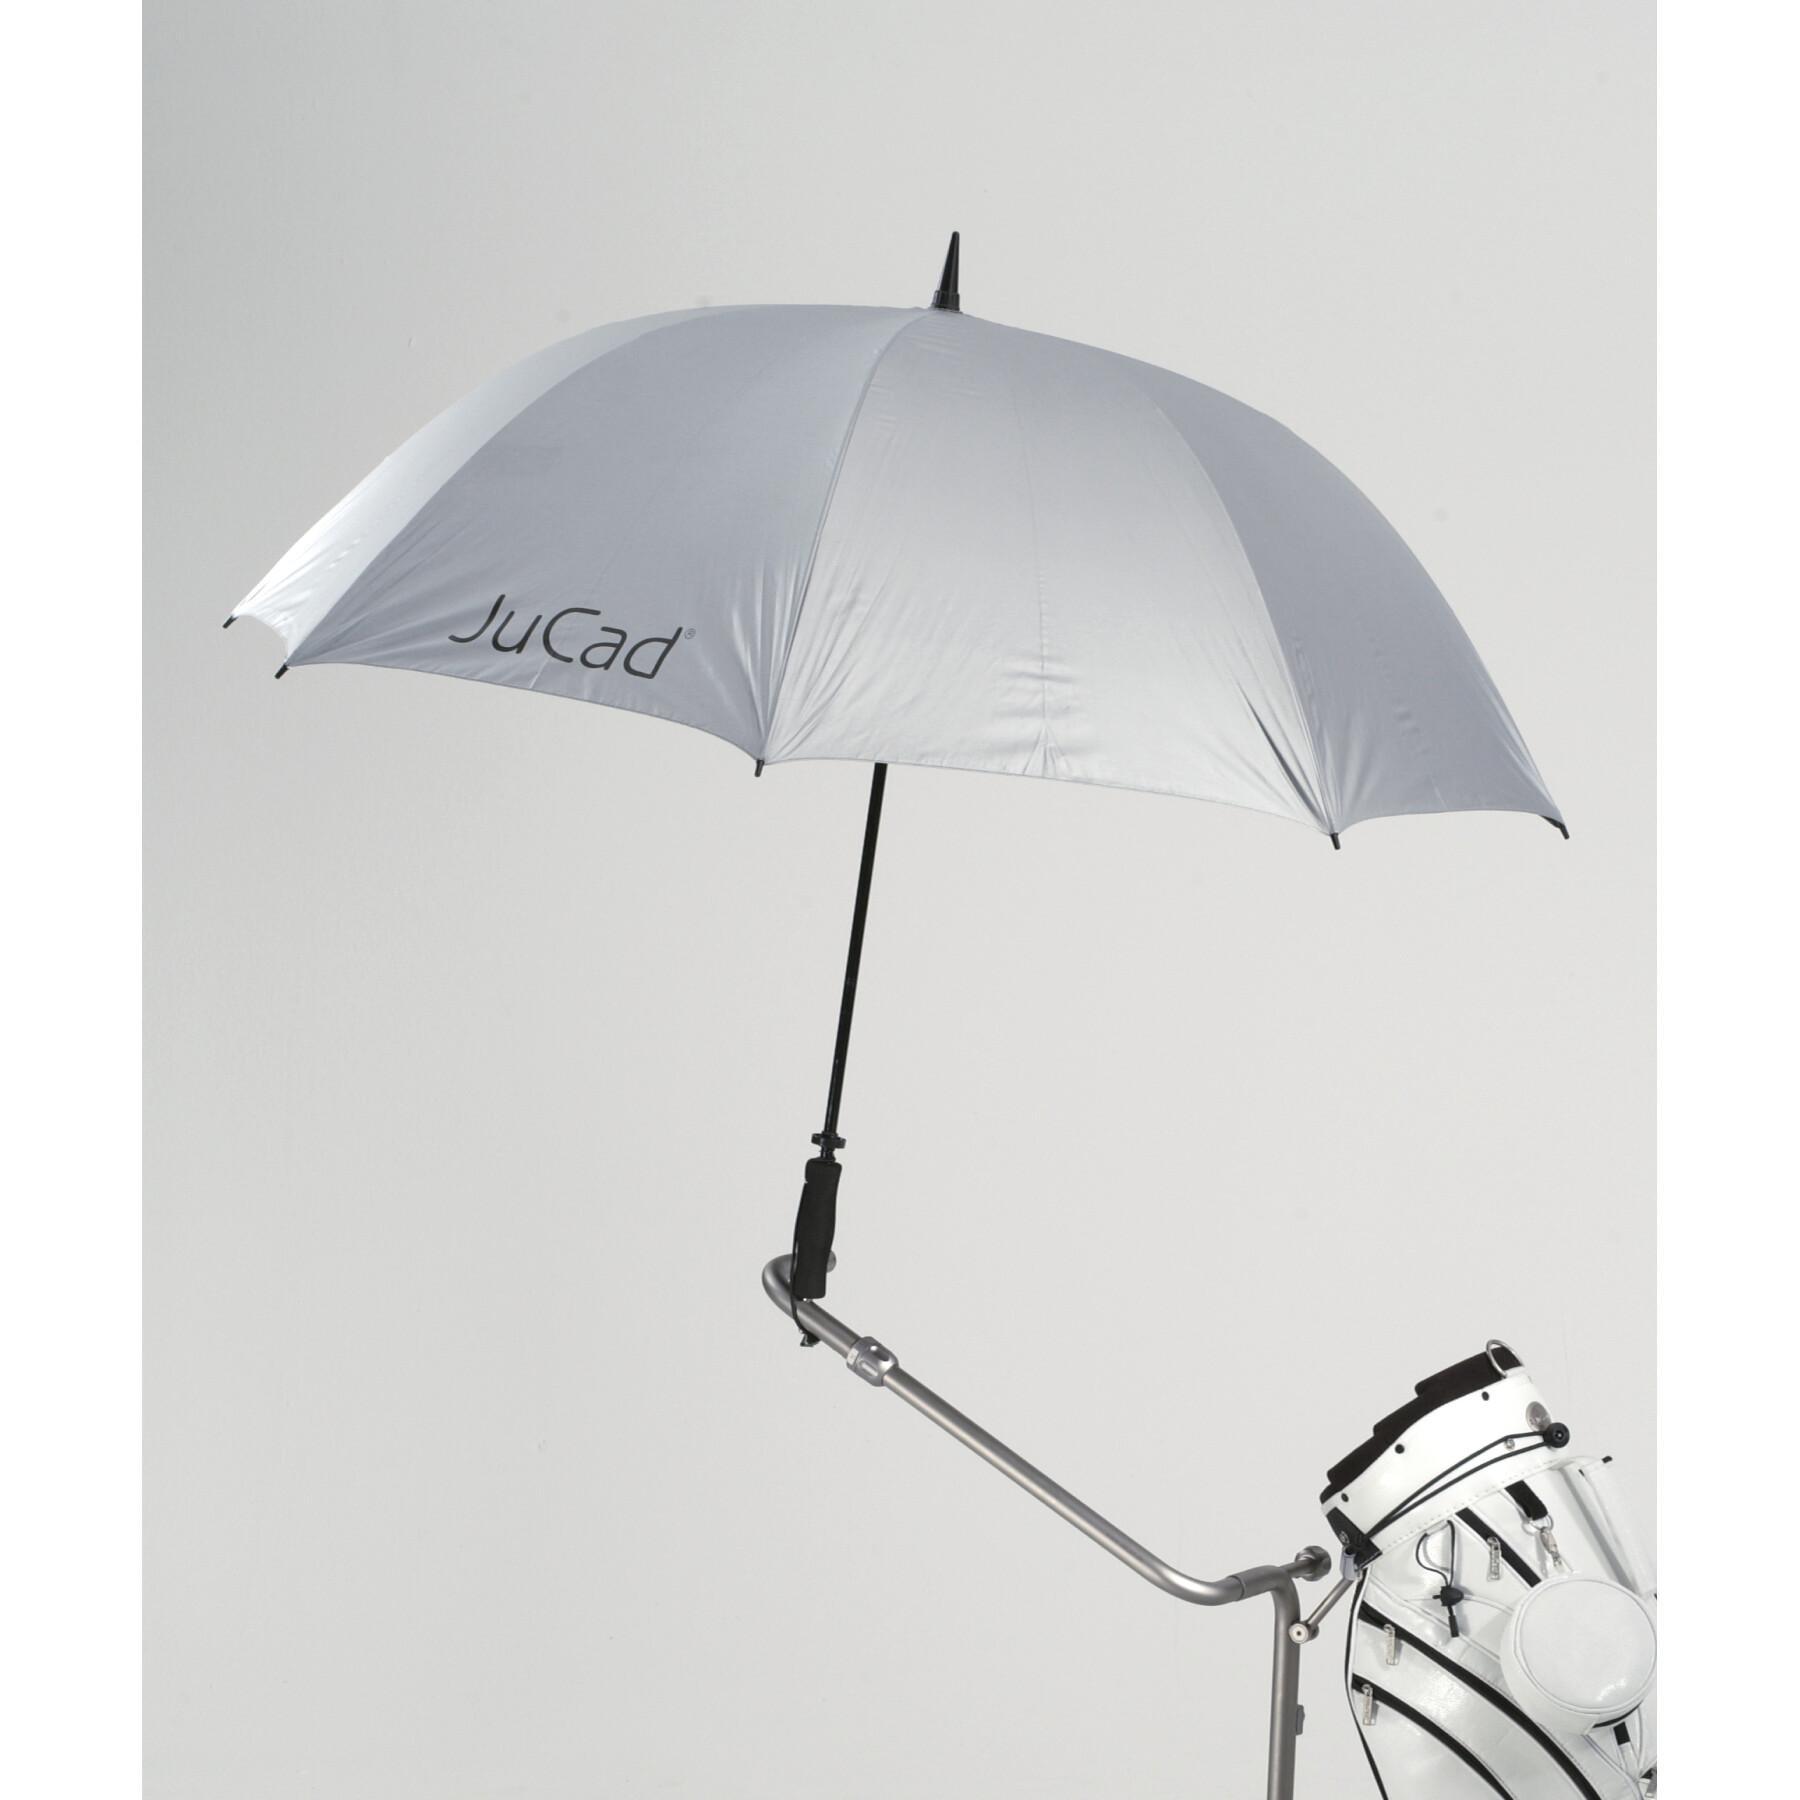 Telescopic umbrella with shaft JuCad